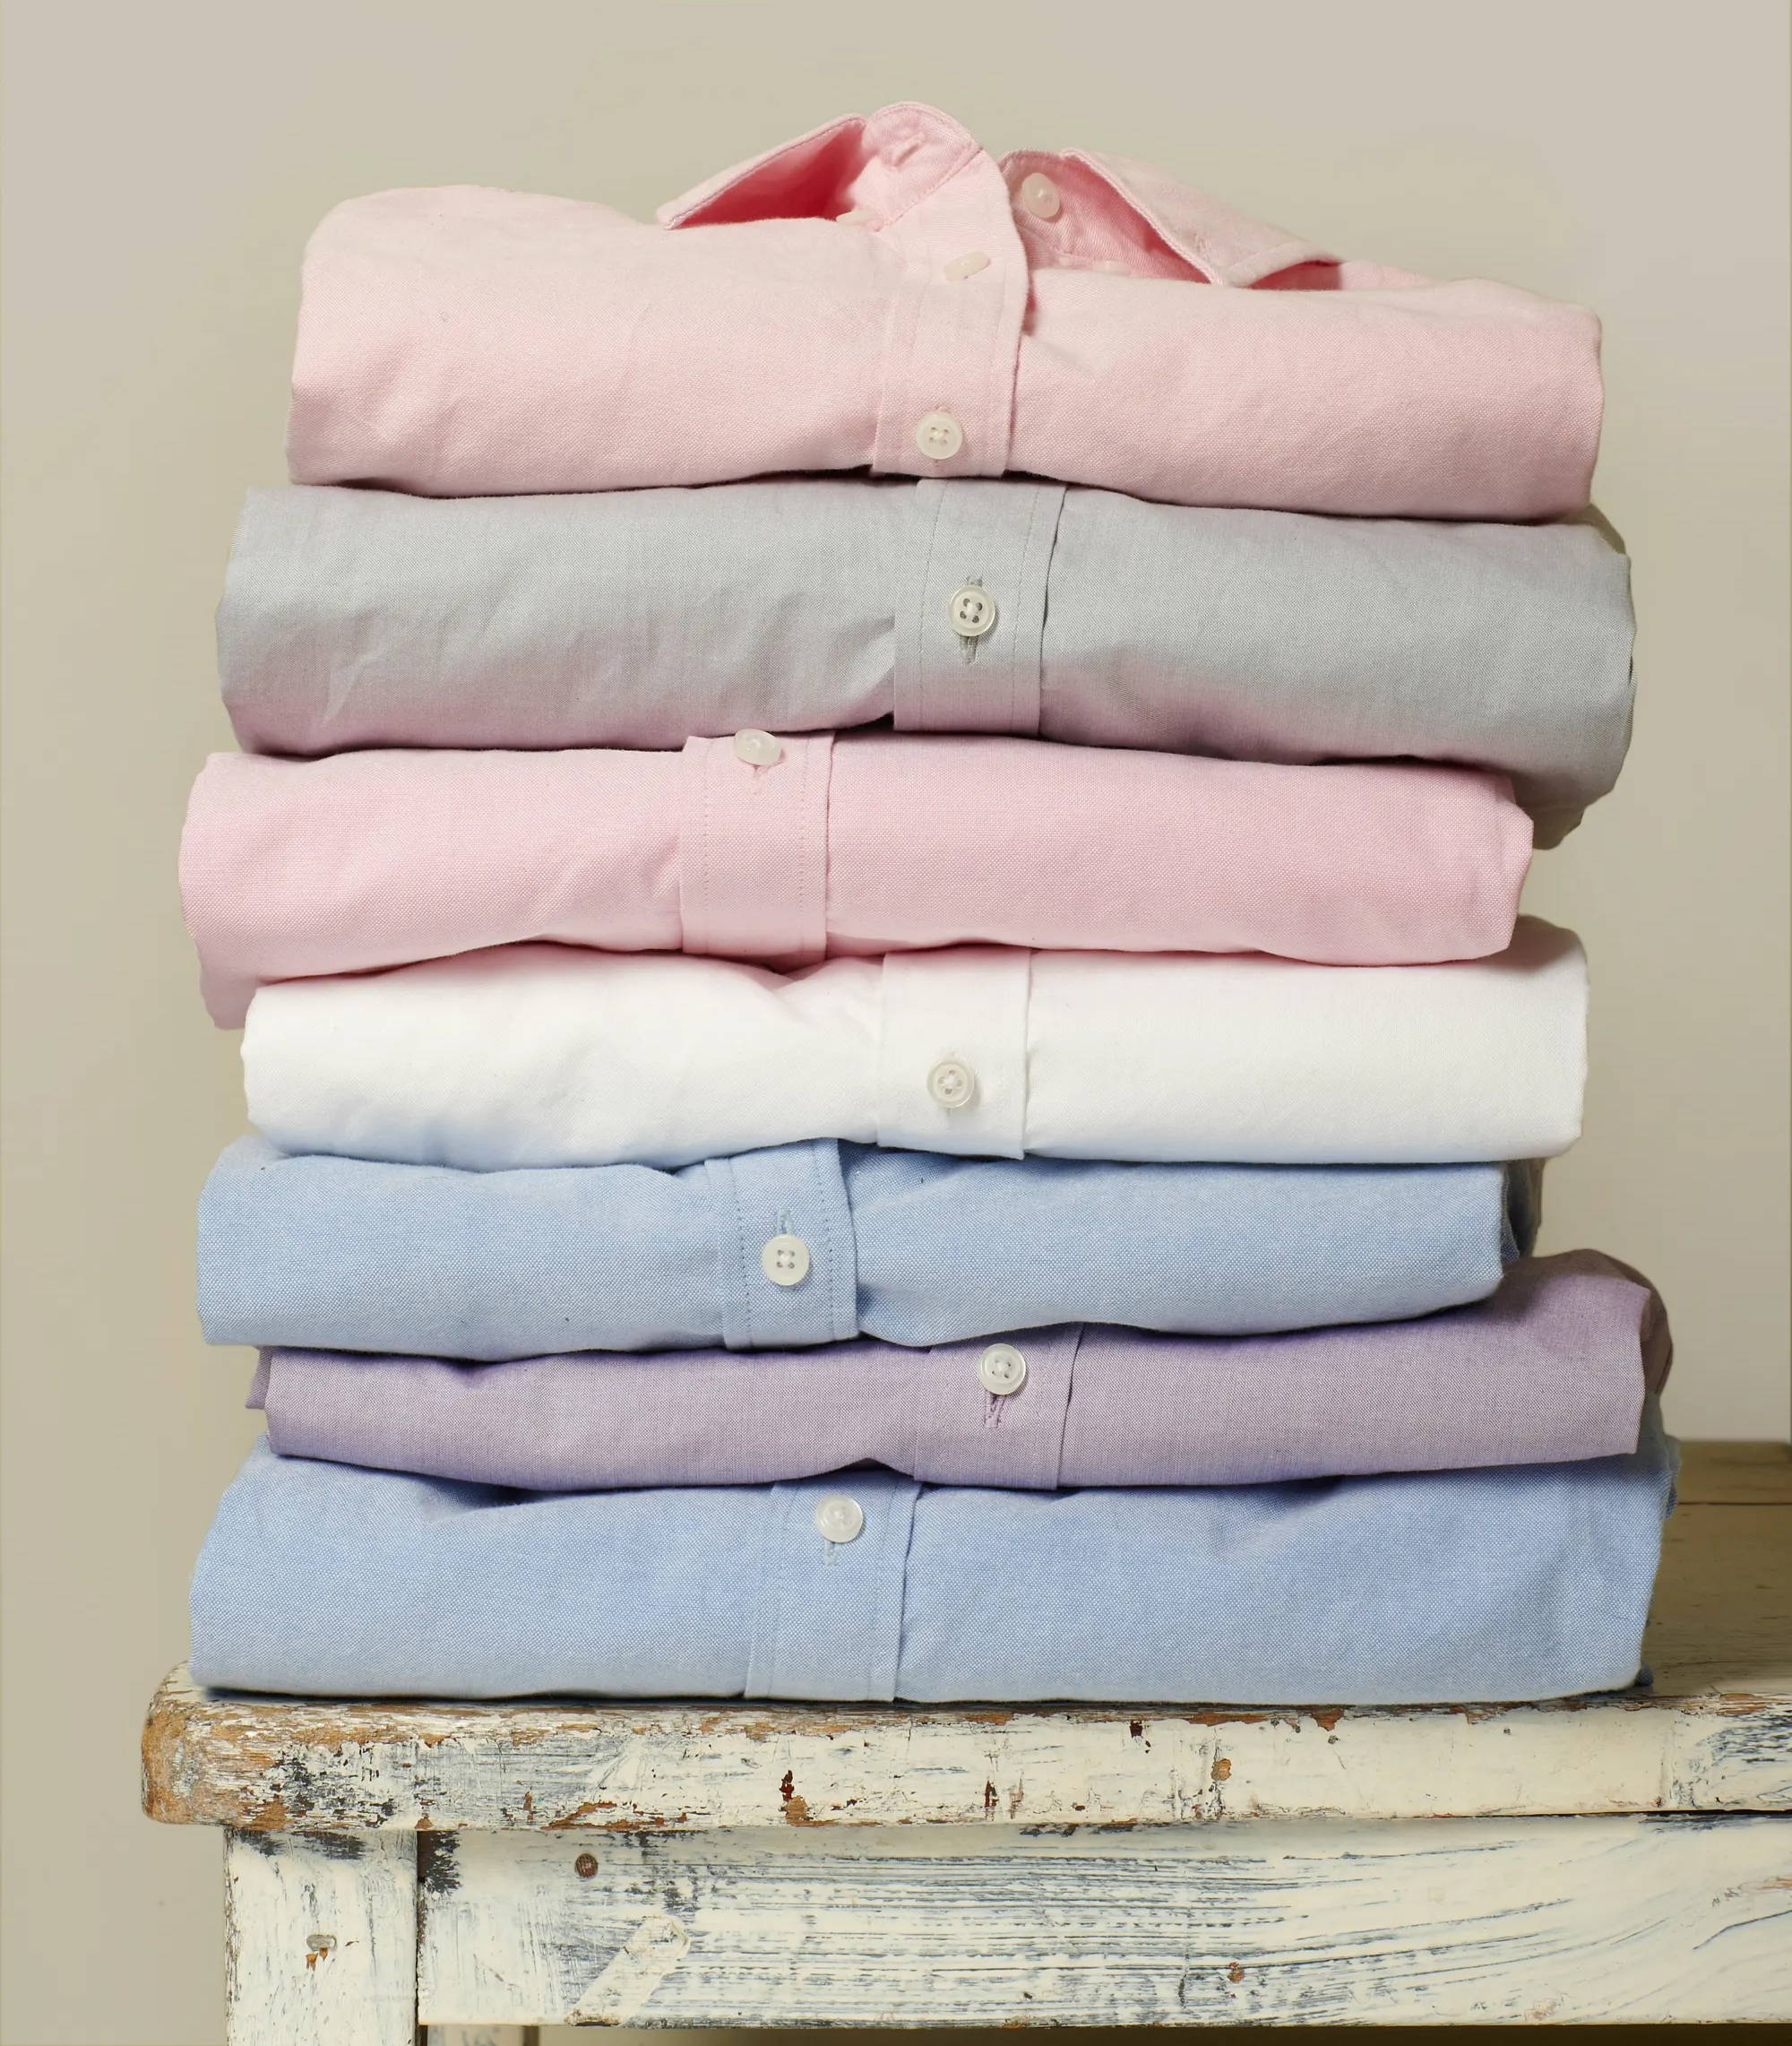 A stack of bespoke dress shirts for men, pink, light grey, light pink, white, light blue, purple